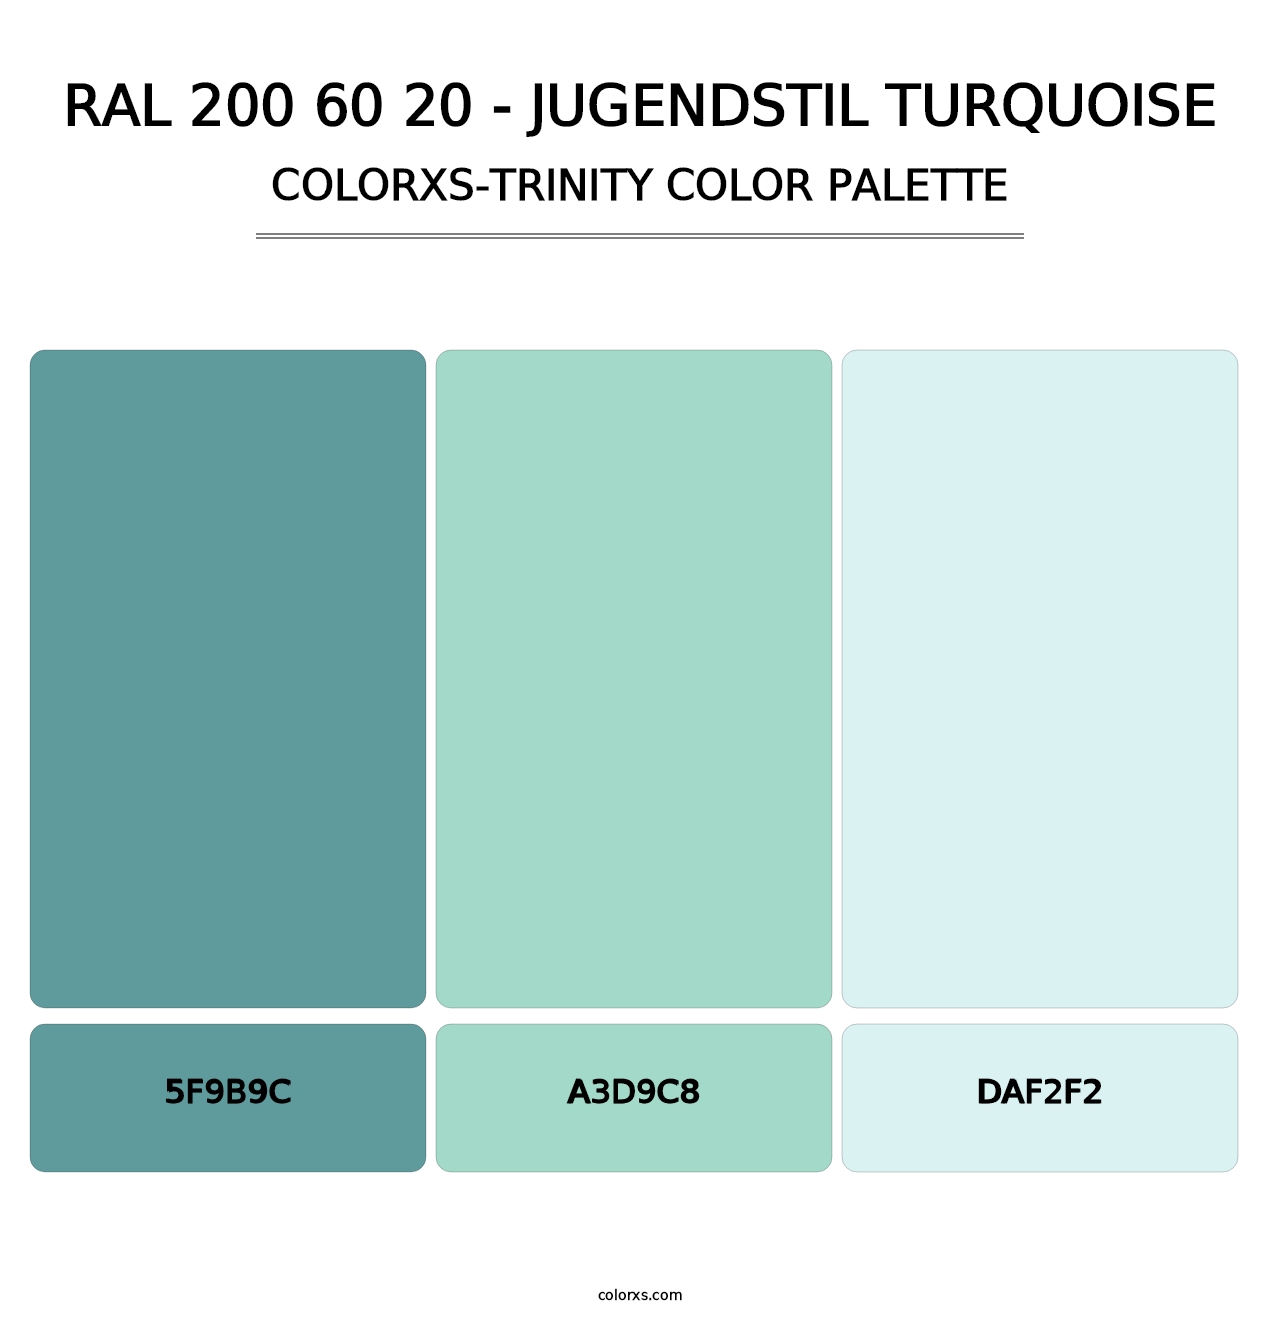 RAL 200 60 20 - Jugendstil Turquoise - Colorxs Trinity Palette